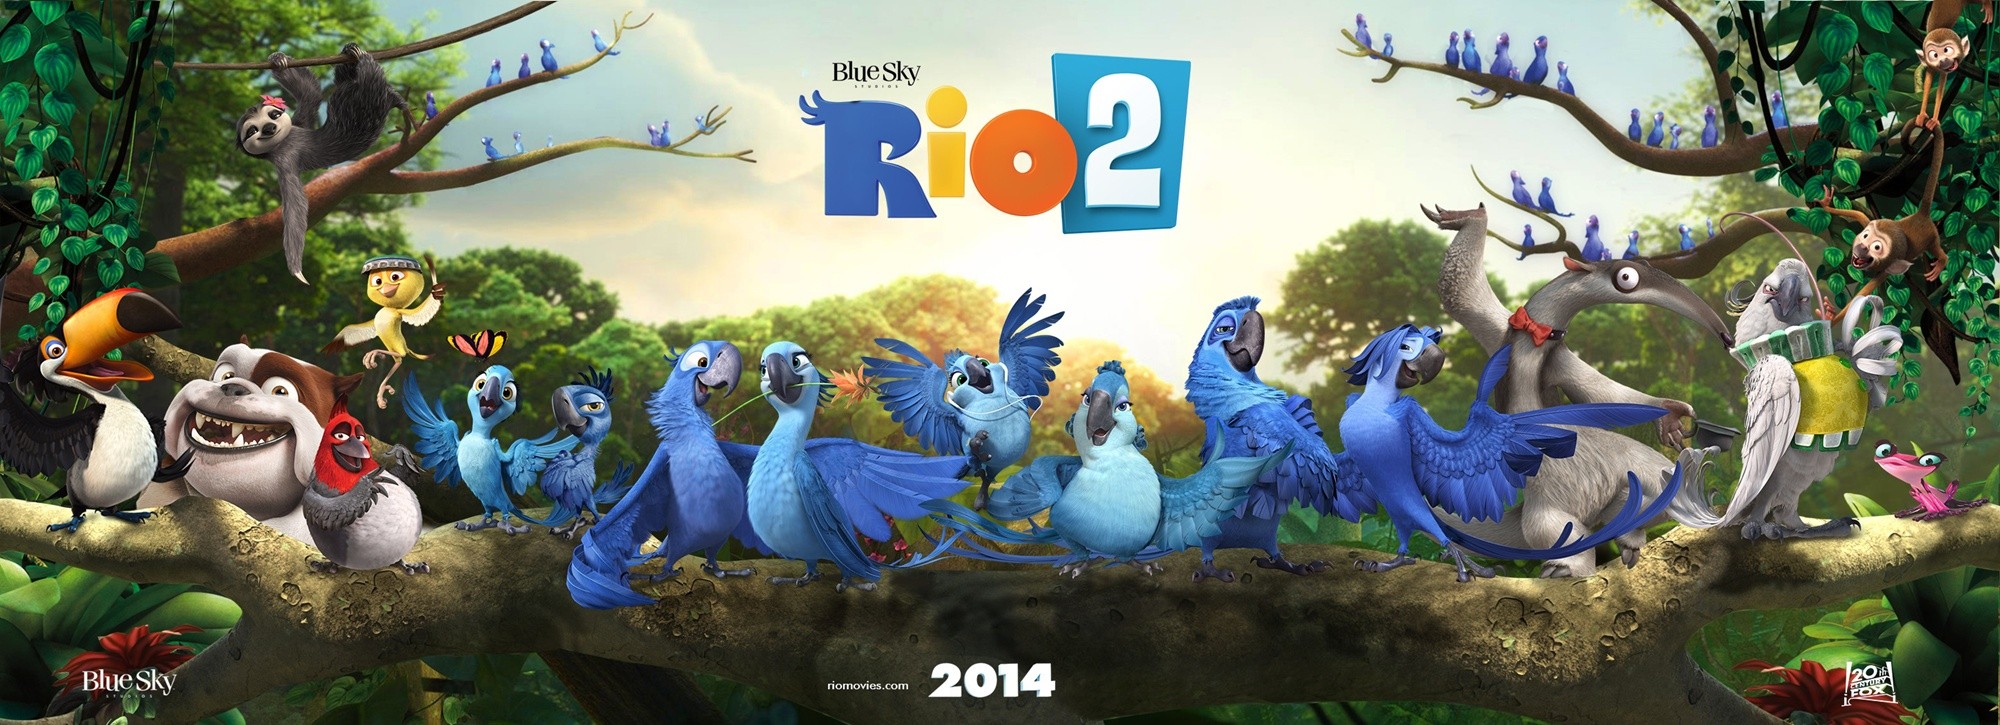 rio 2 full movie hd